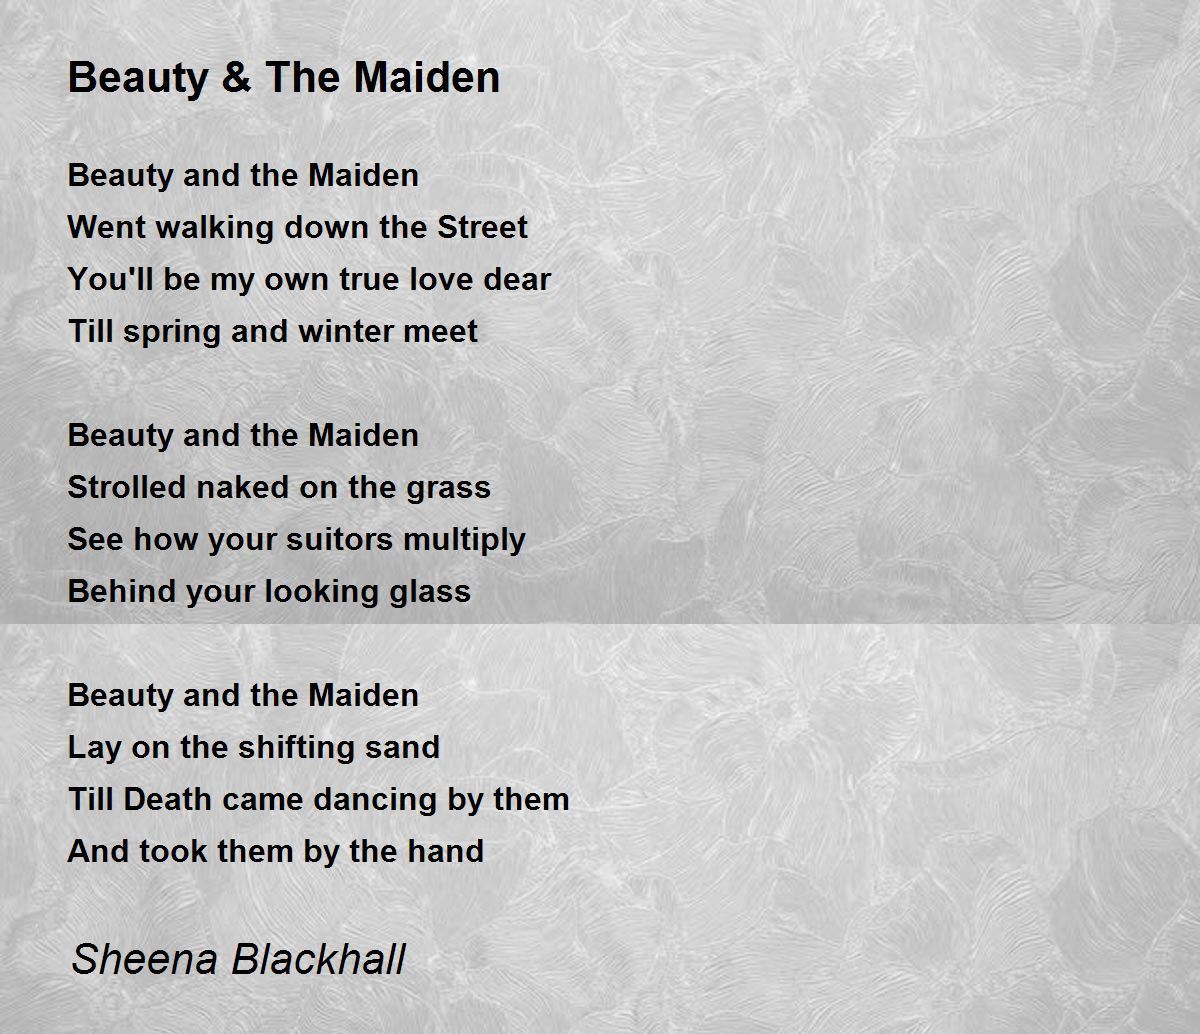 Beauty & The Maiden - Beauty & The Maiden Poem by Sheena Blackhall